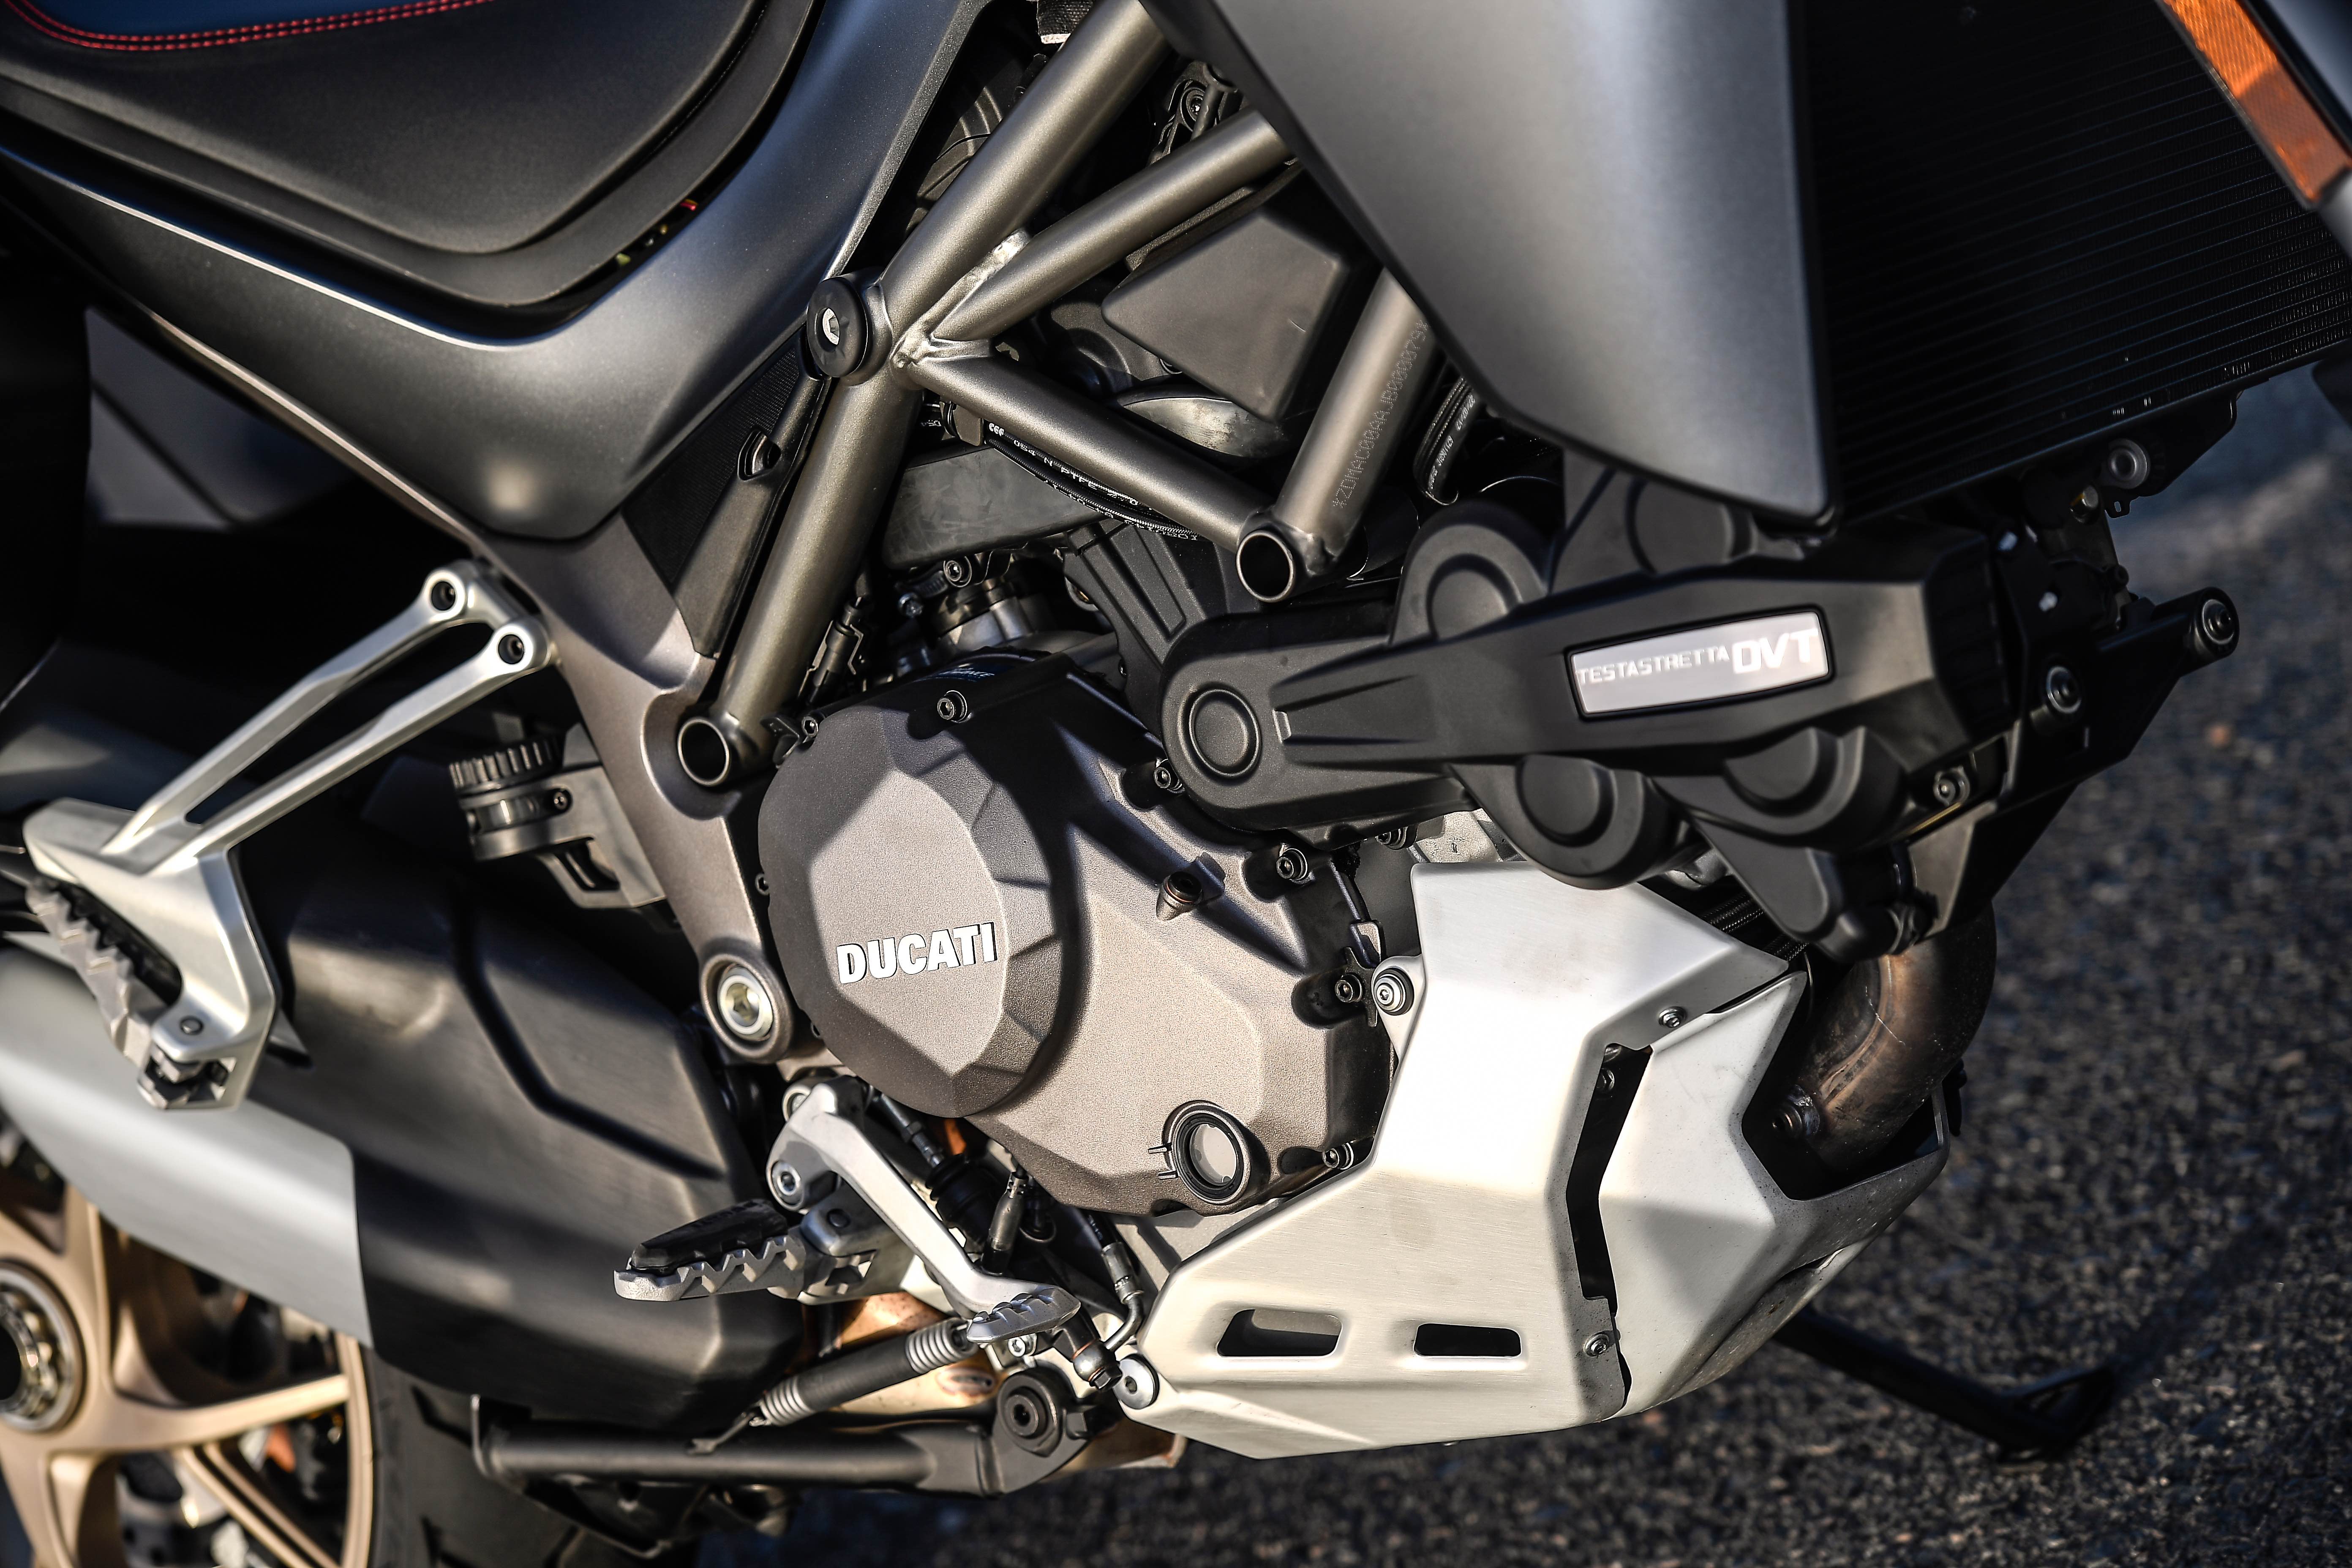 First ride: Ducati Multistrada 1260 S review